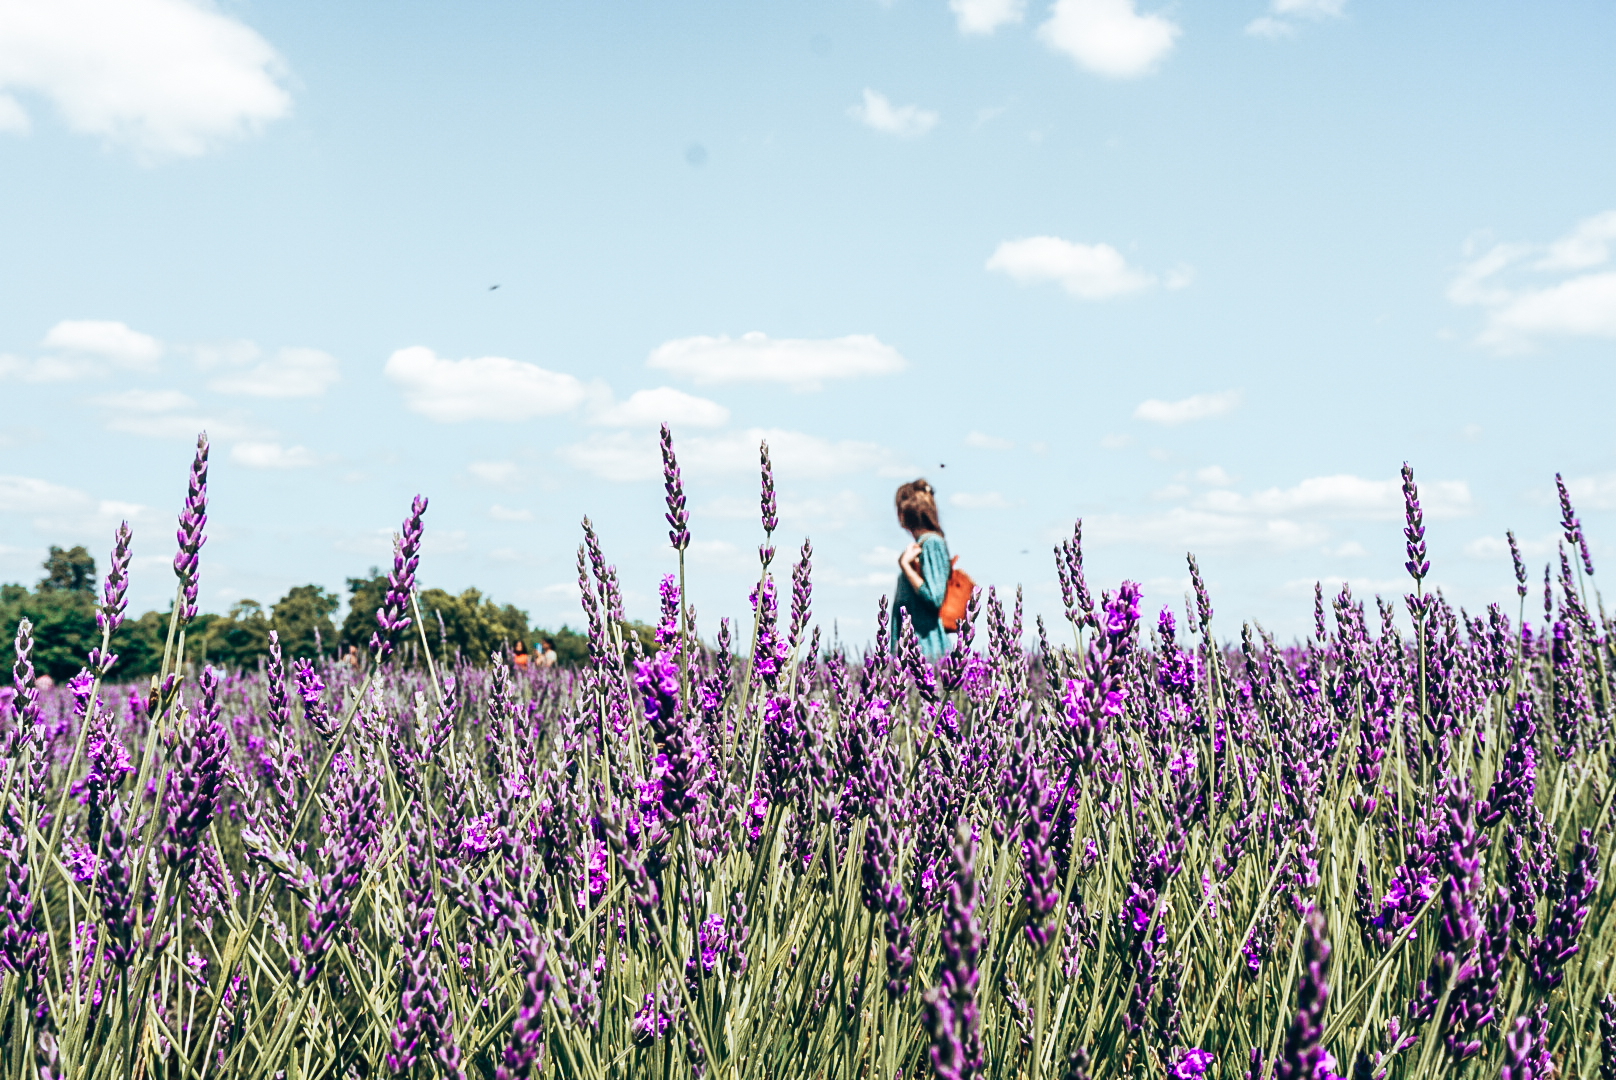 Mayfield Lavender Farm: A Sea of Purple